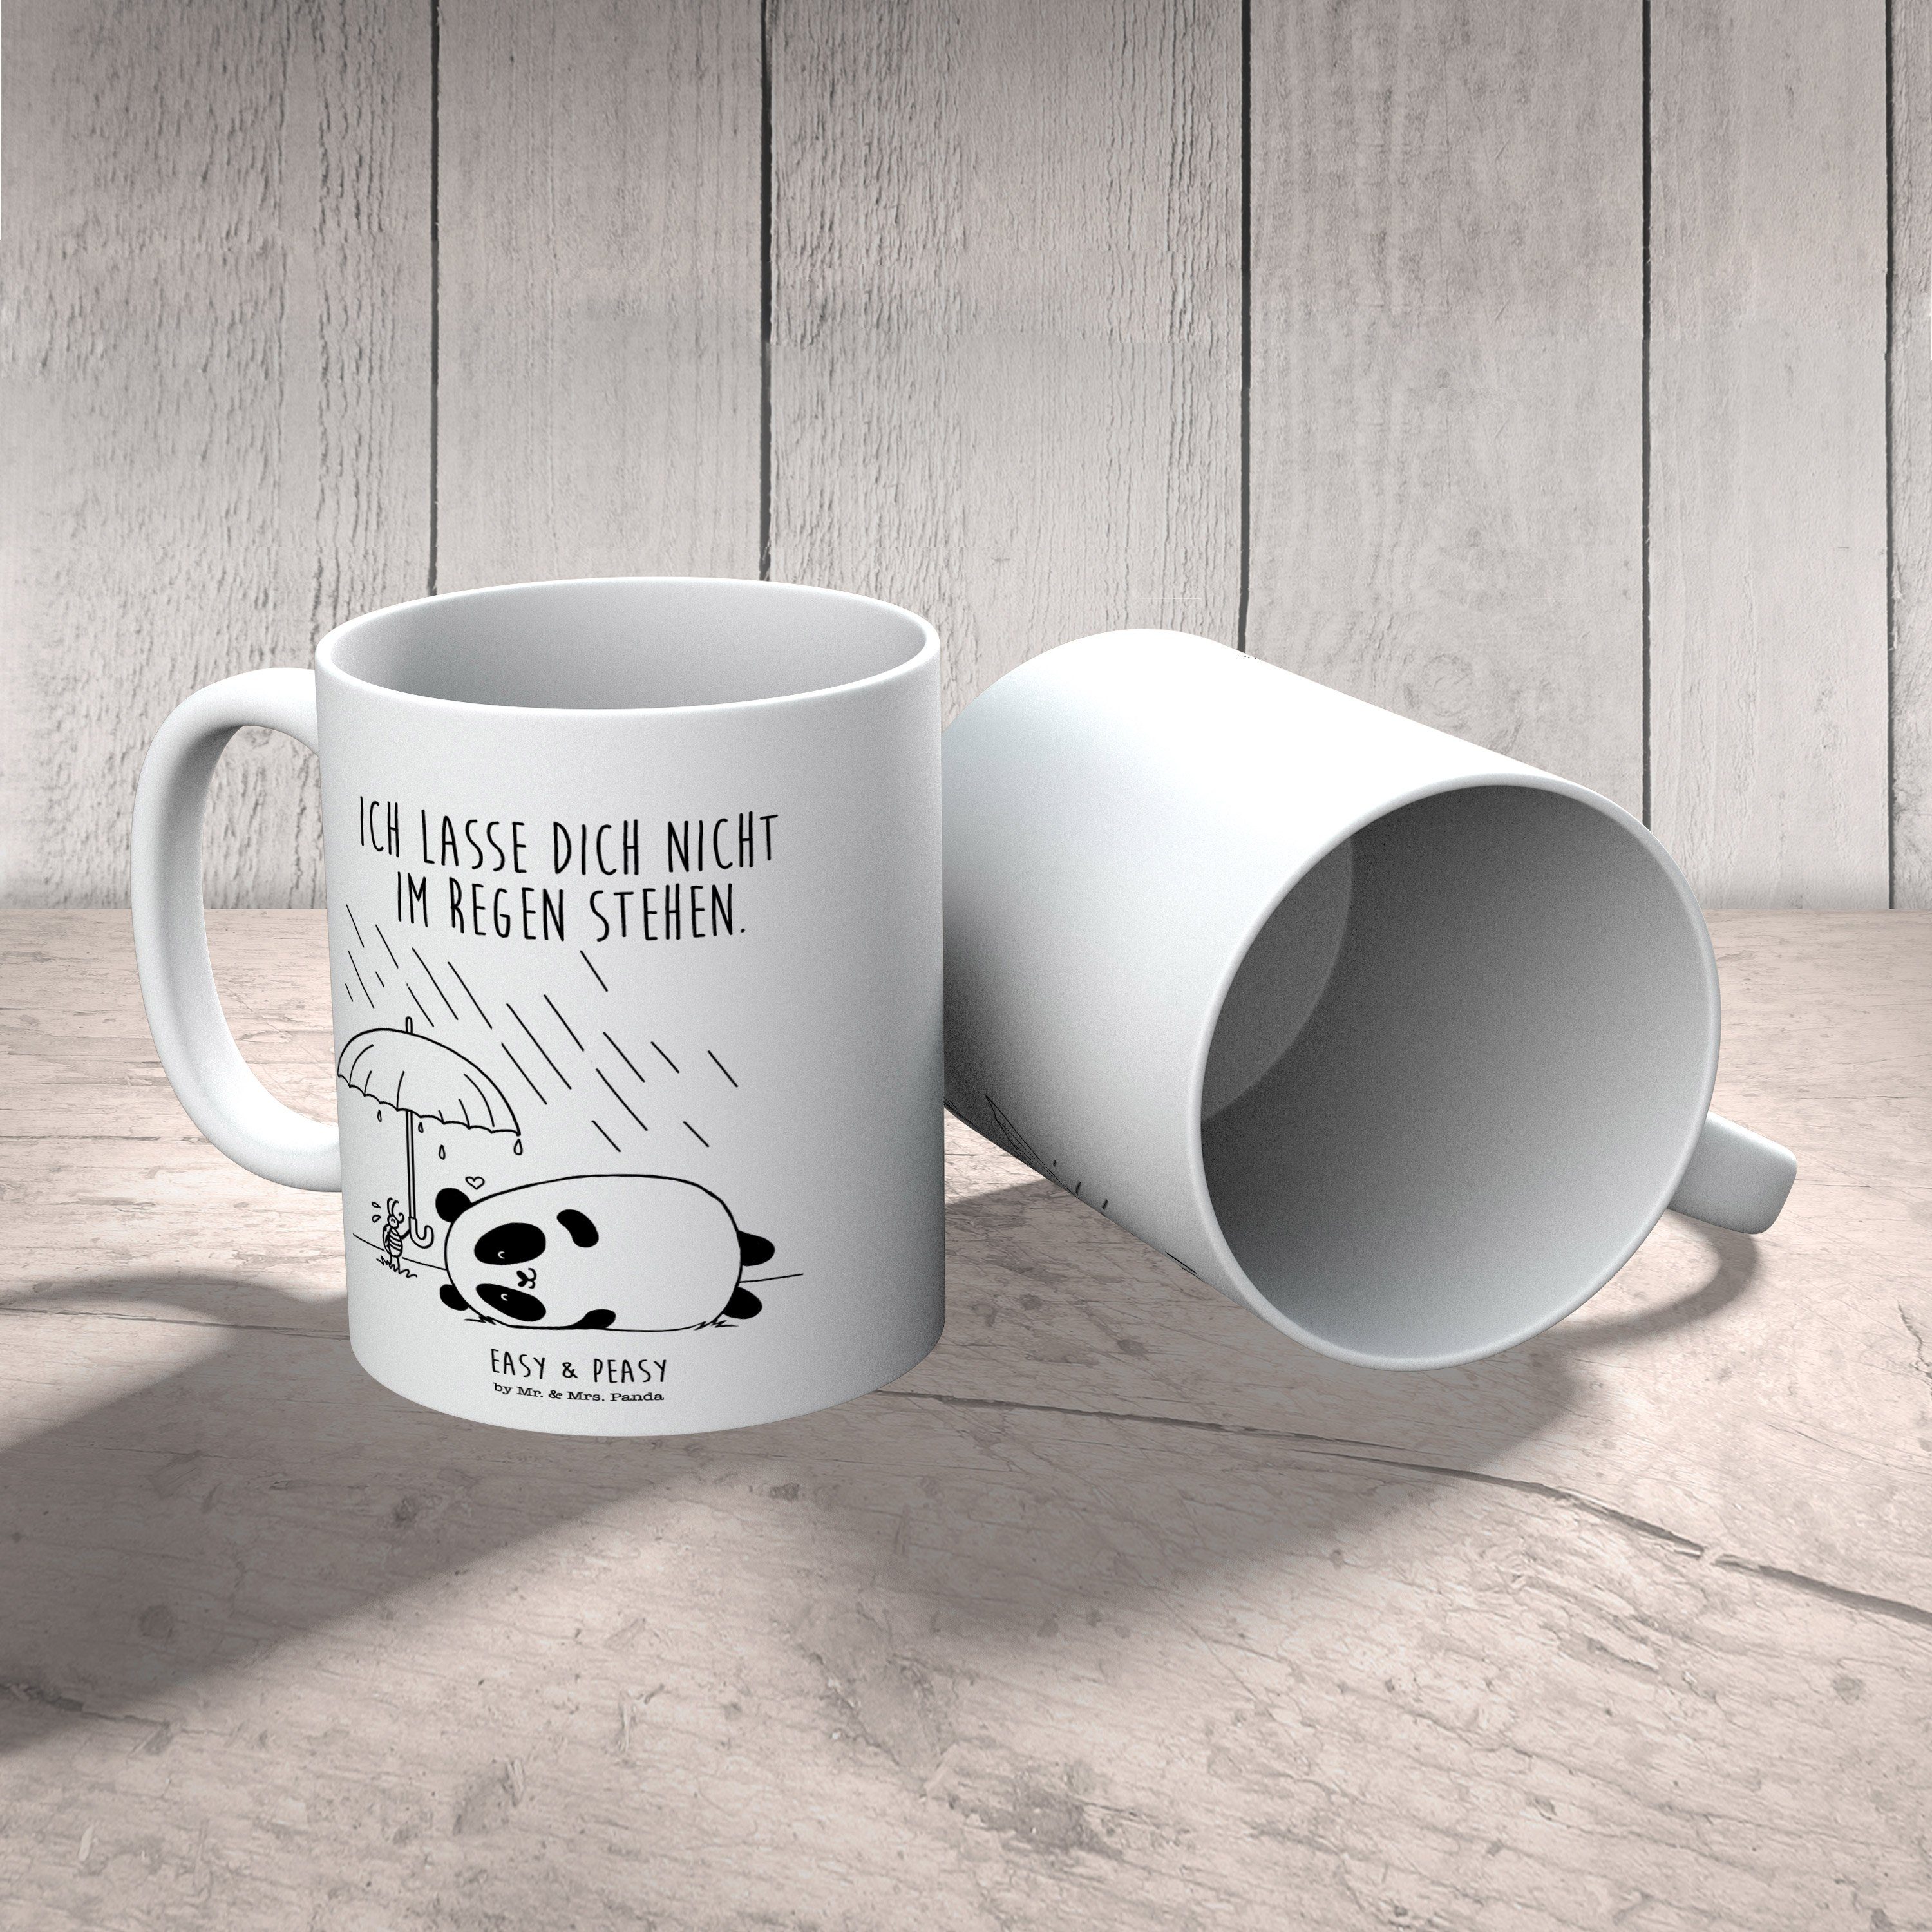 Mr. & Mrs. Panda Tasse Easy & Tasse Moti, - Freundschaft Kaffeetasse, Keramik Peasy Geschenk, Weiß 